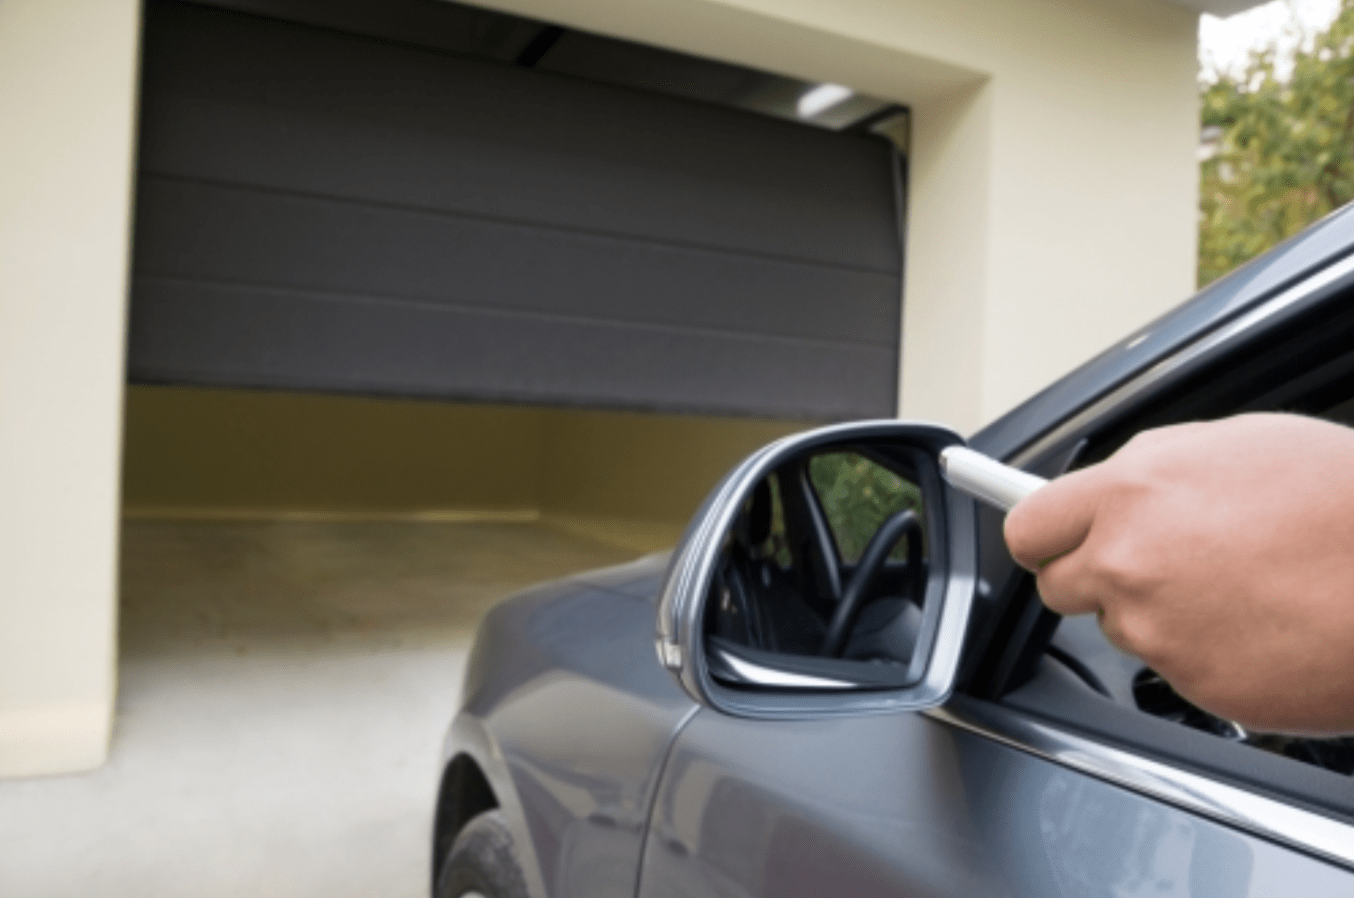 Some tips to enhance your Garage Door Security